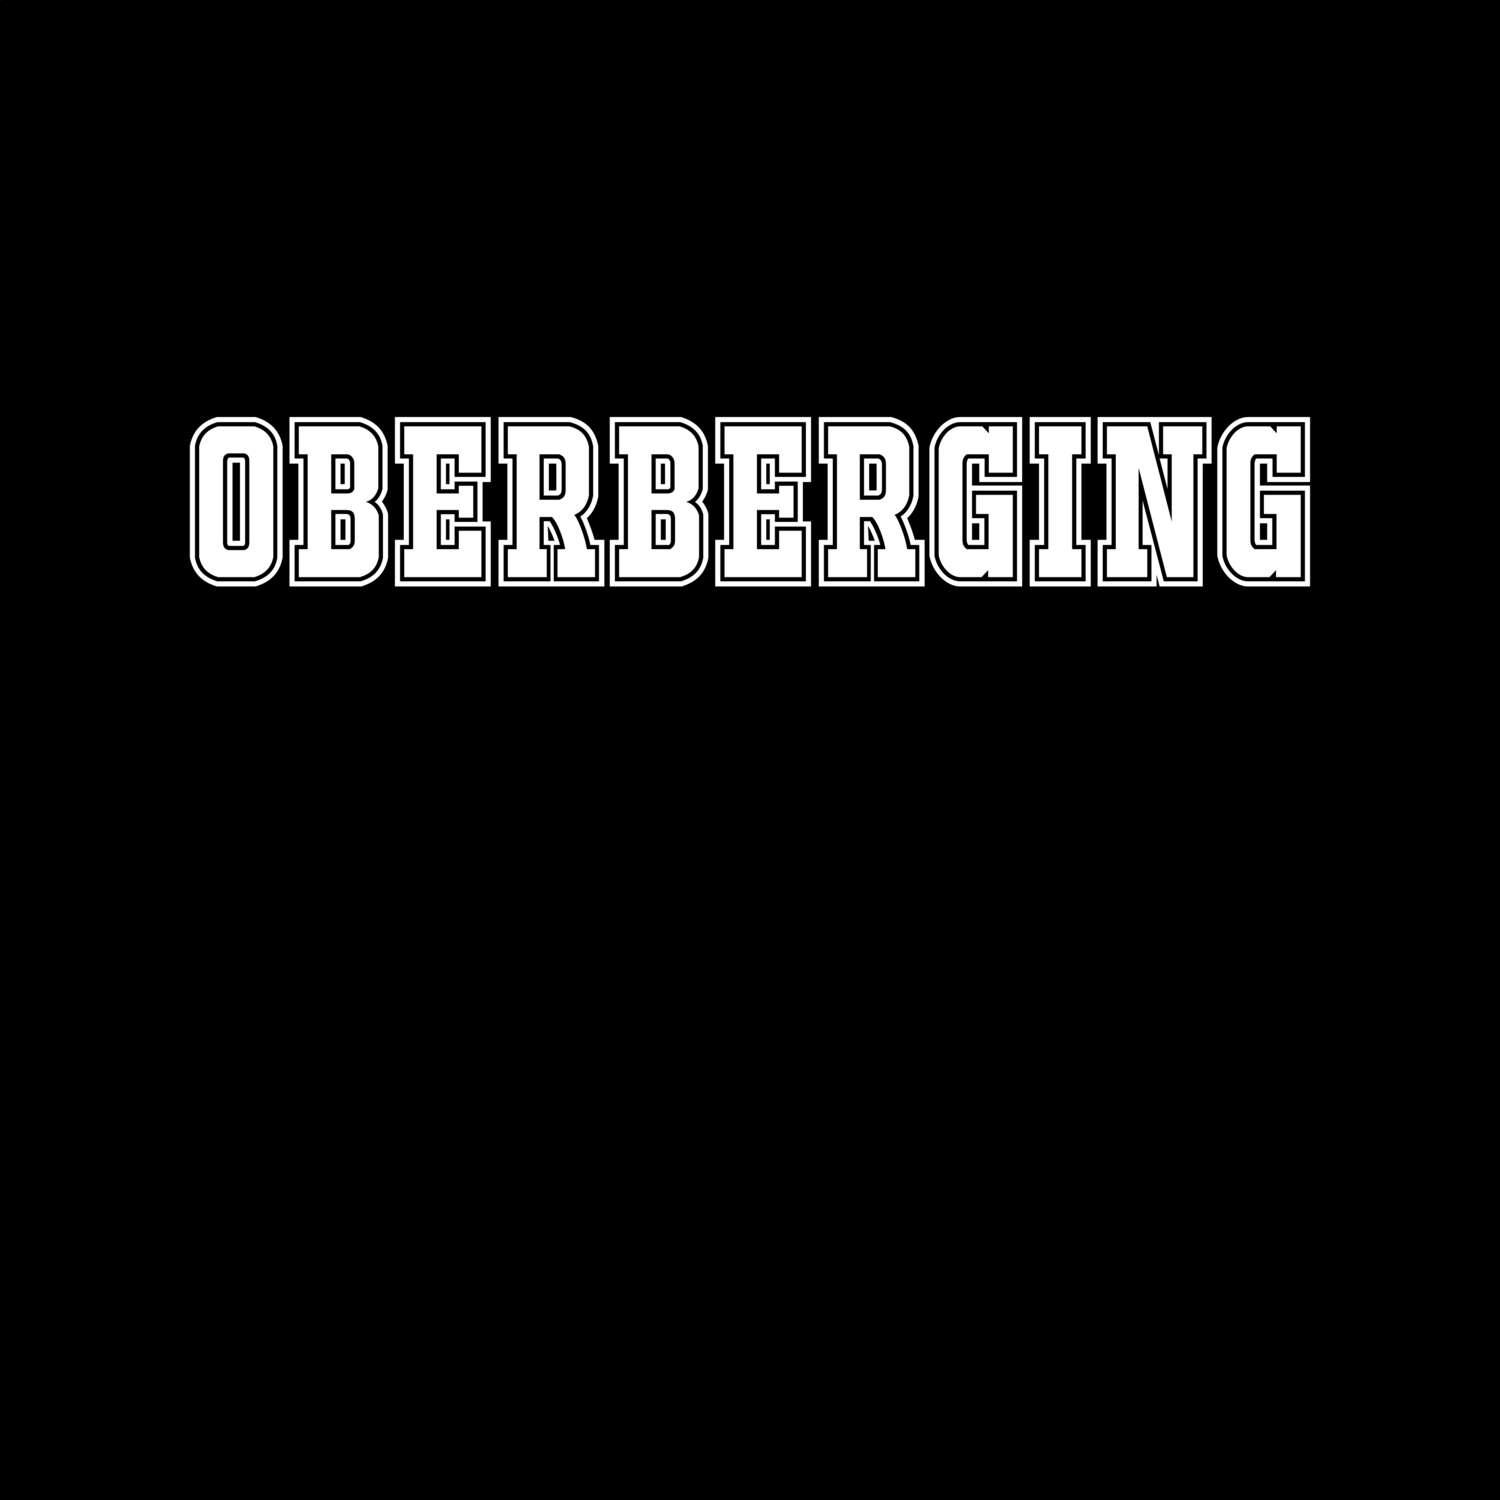 Oberberging T-Shirt »Classic«